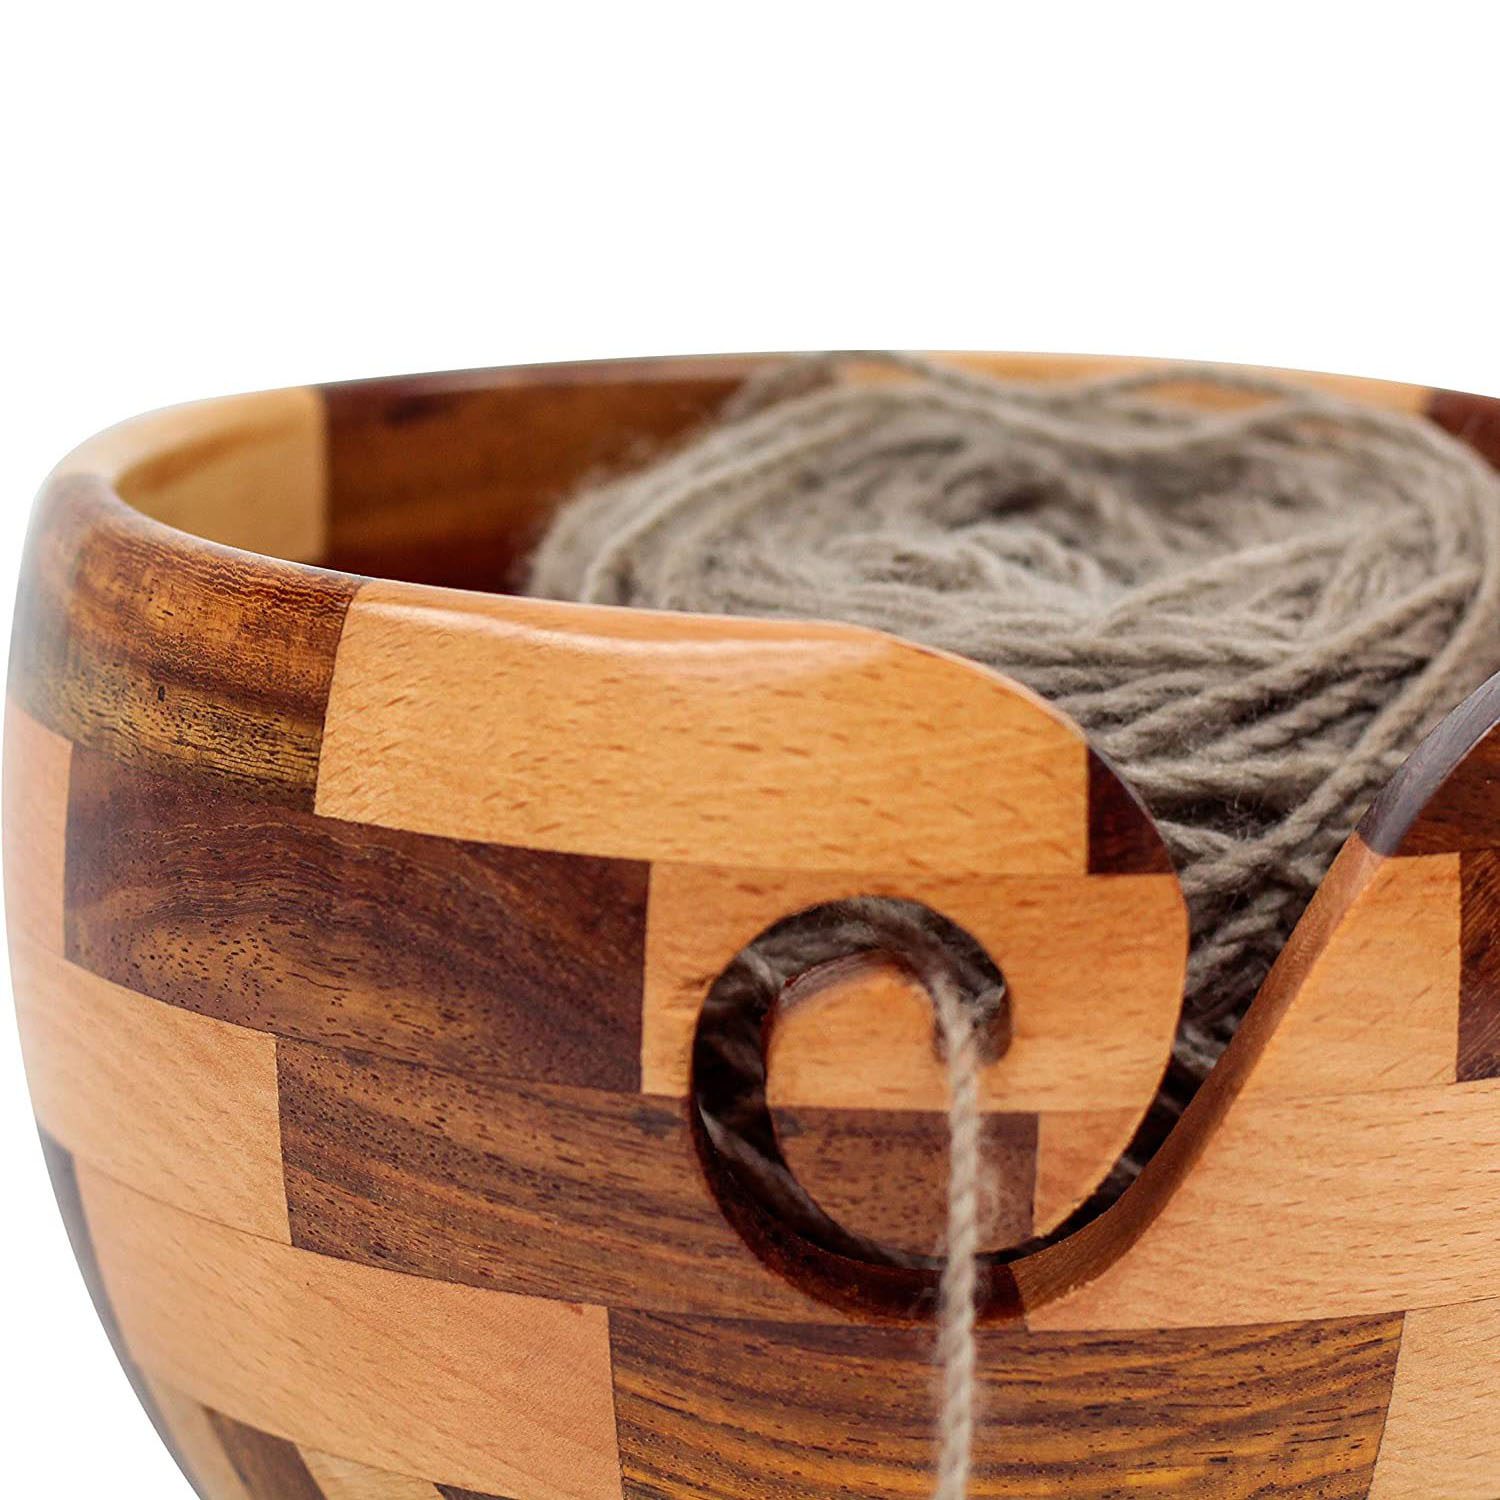 Premium Yarn Storage Bowl | Handcrafted Wood Yarn Bowl | Knitting and Crochet Accessories